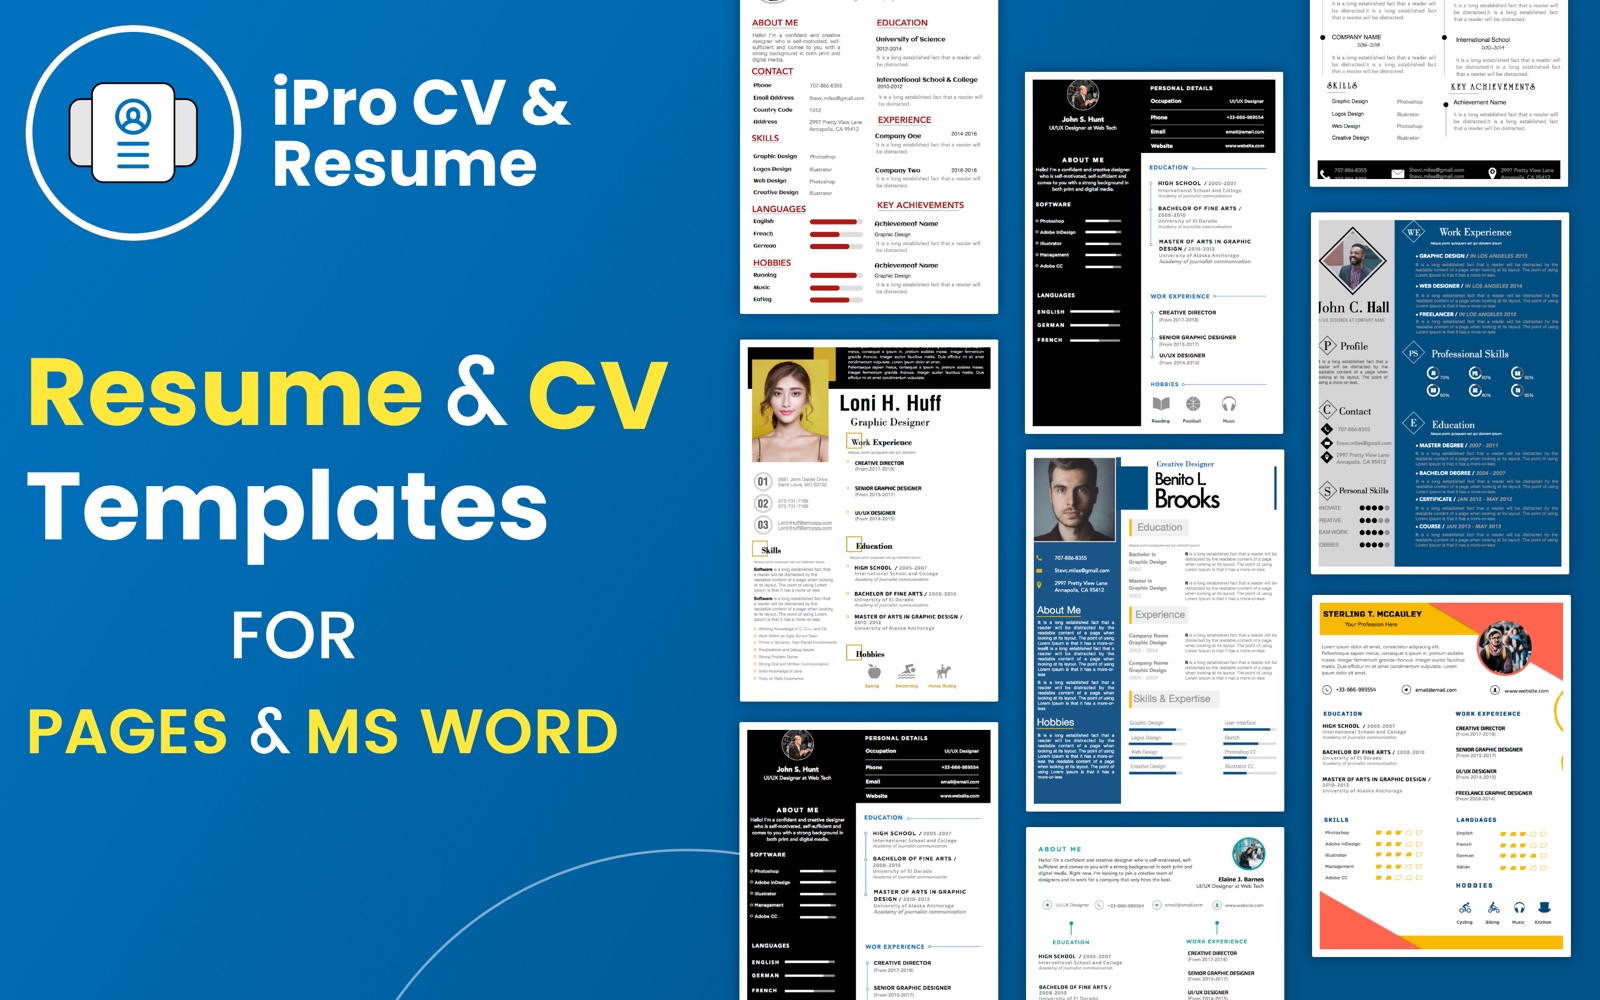 CV & Resume Templates by iPro 1.6 : Main Window